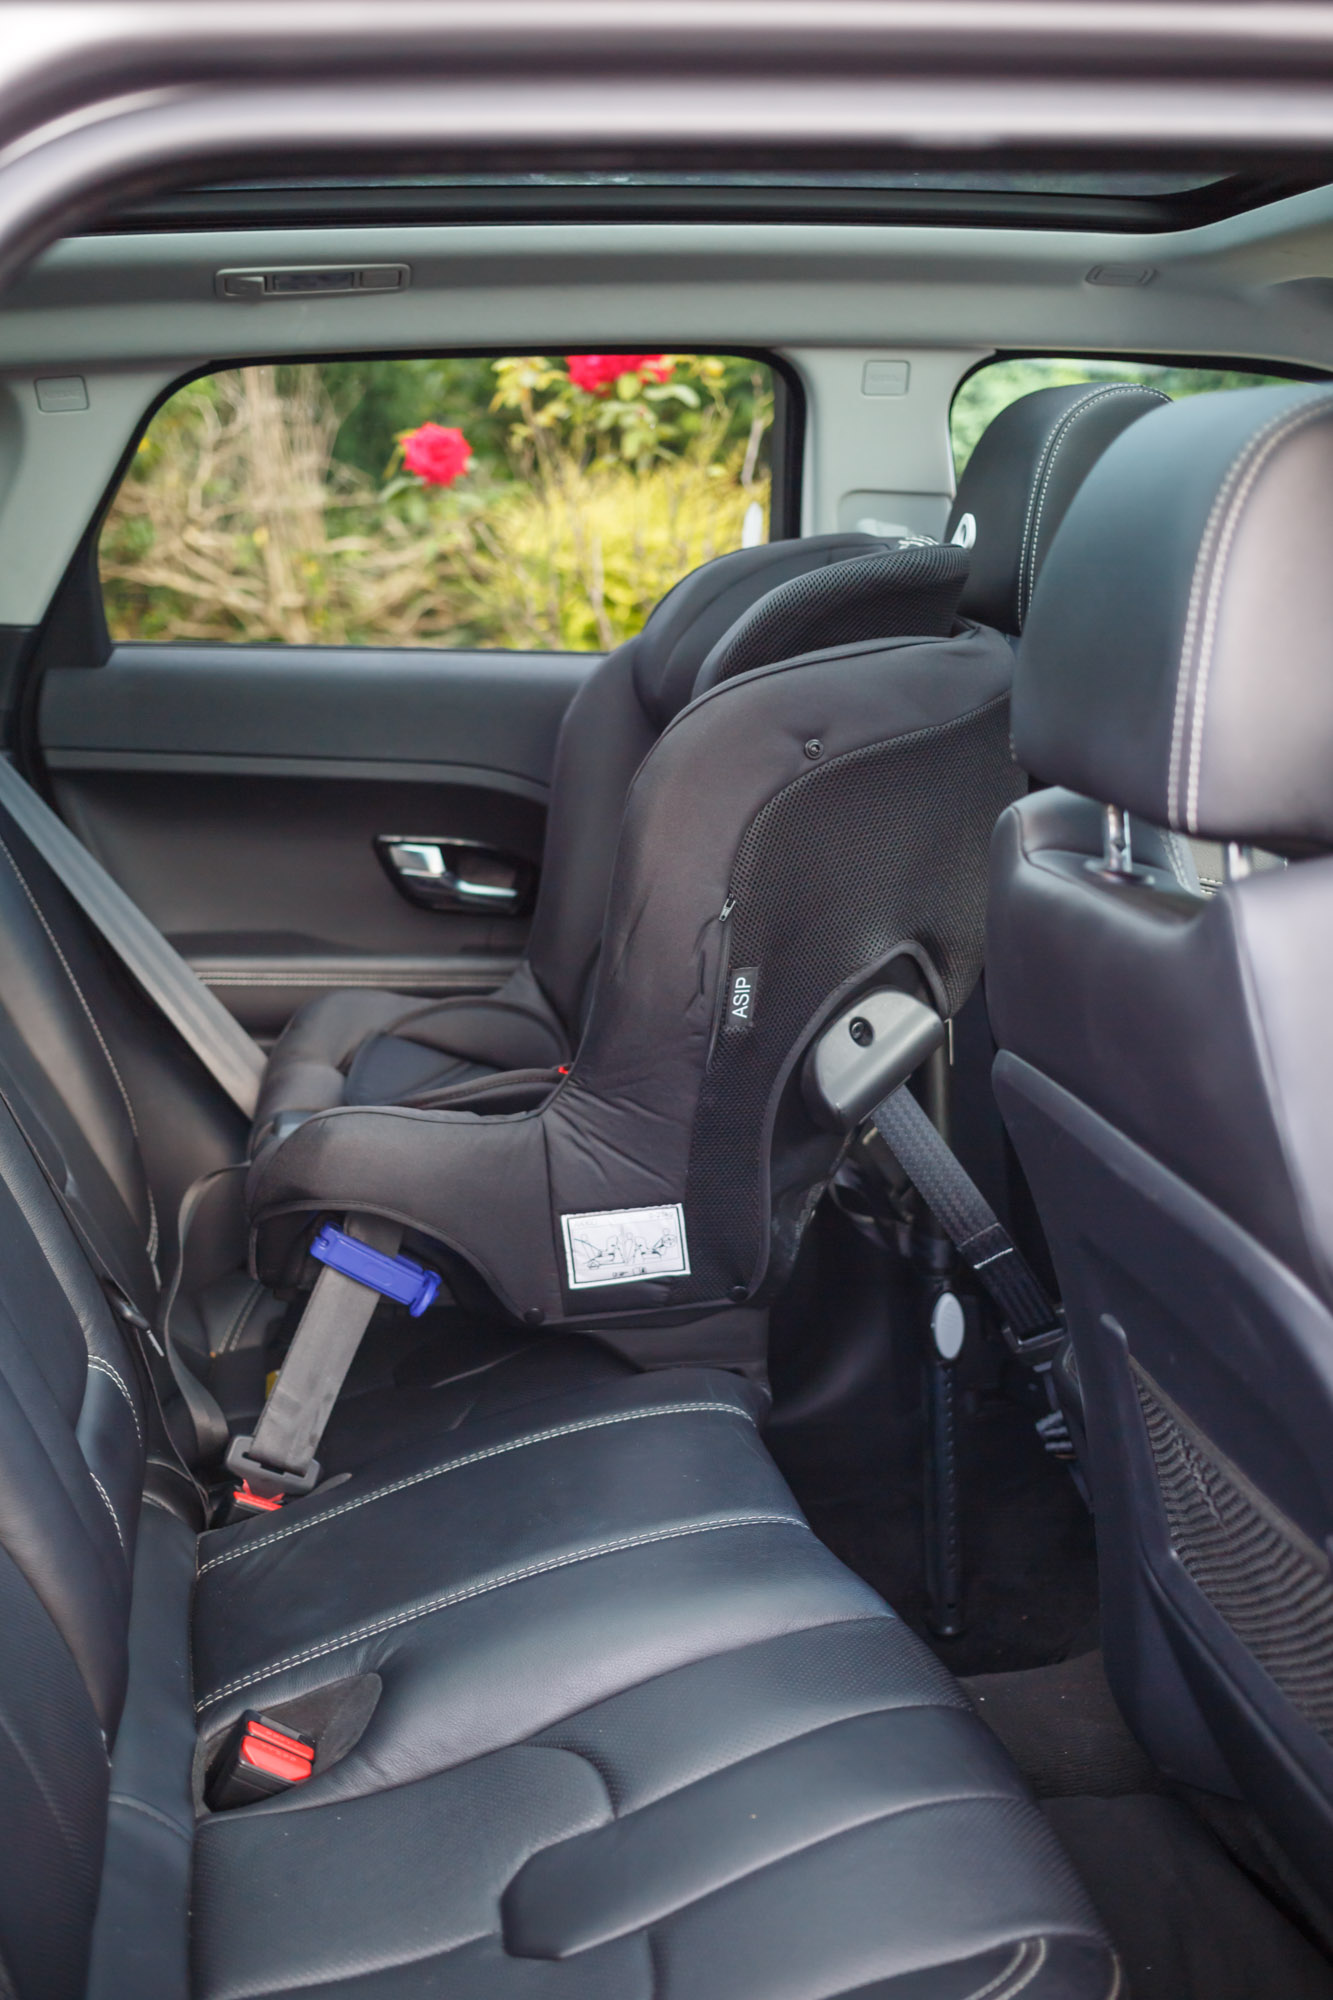 axkid rear facing car seat